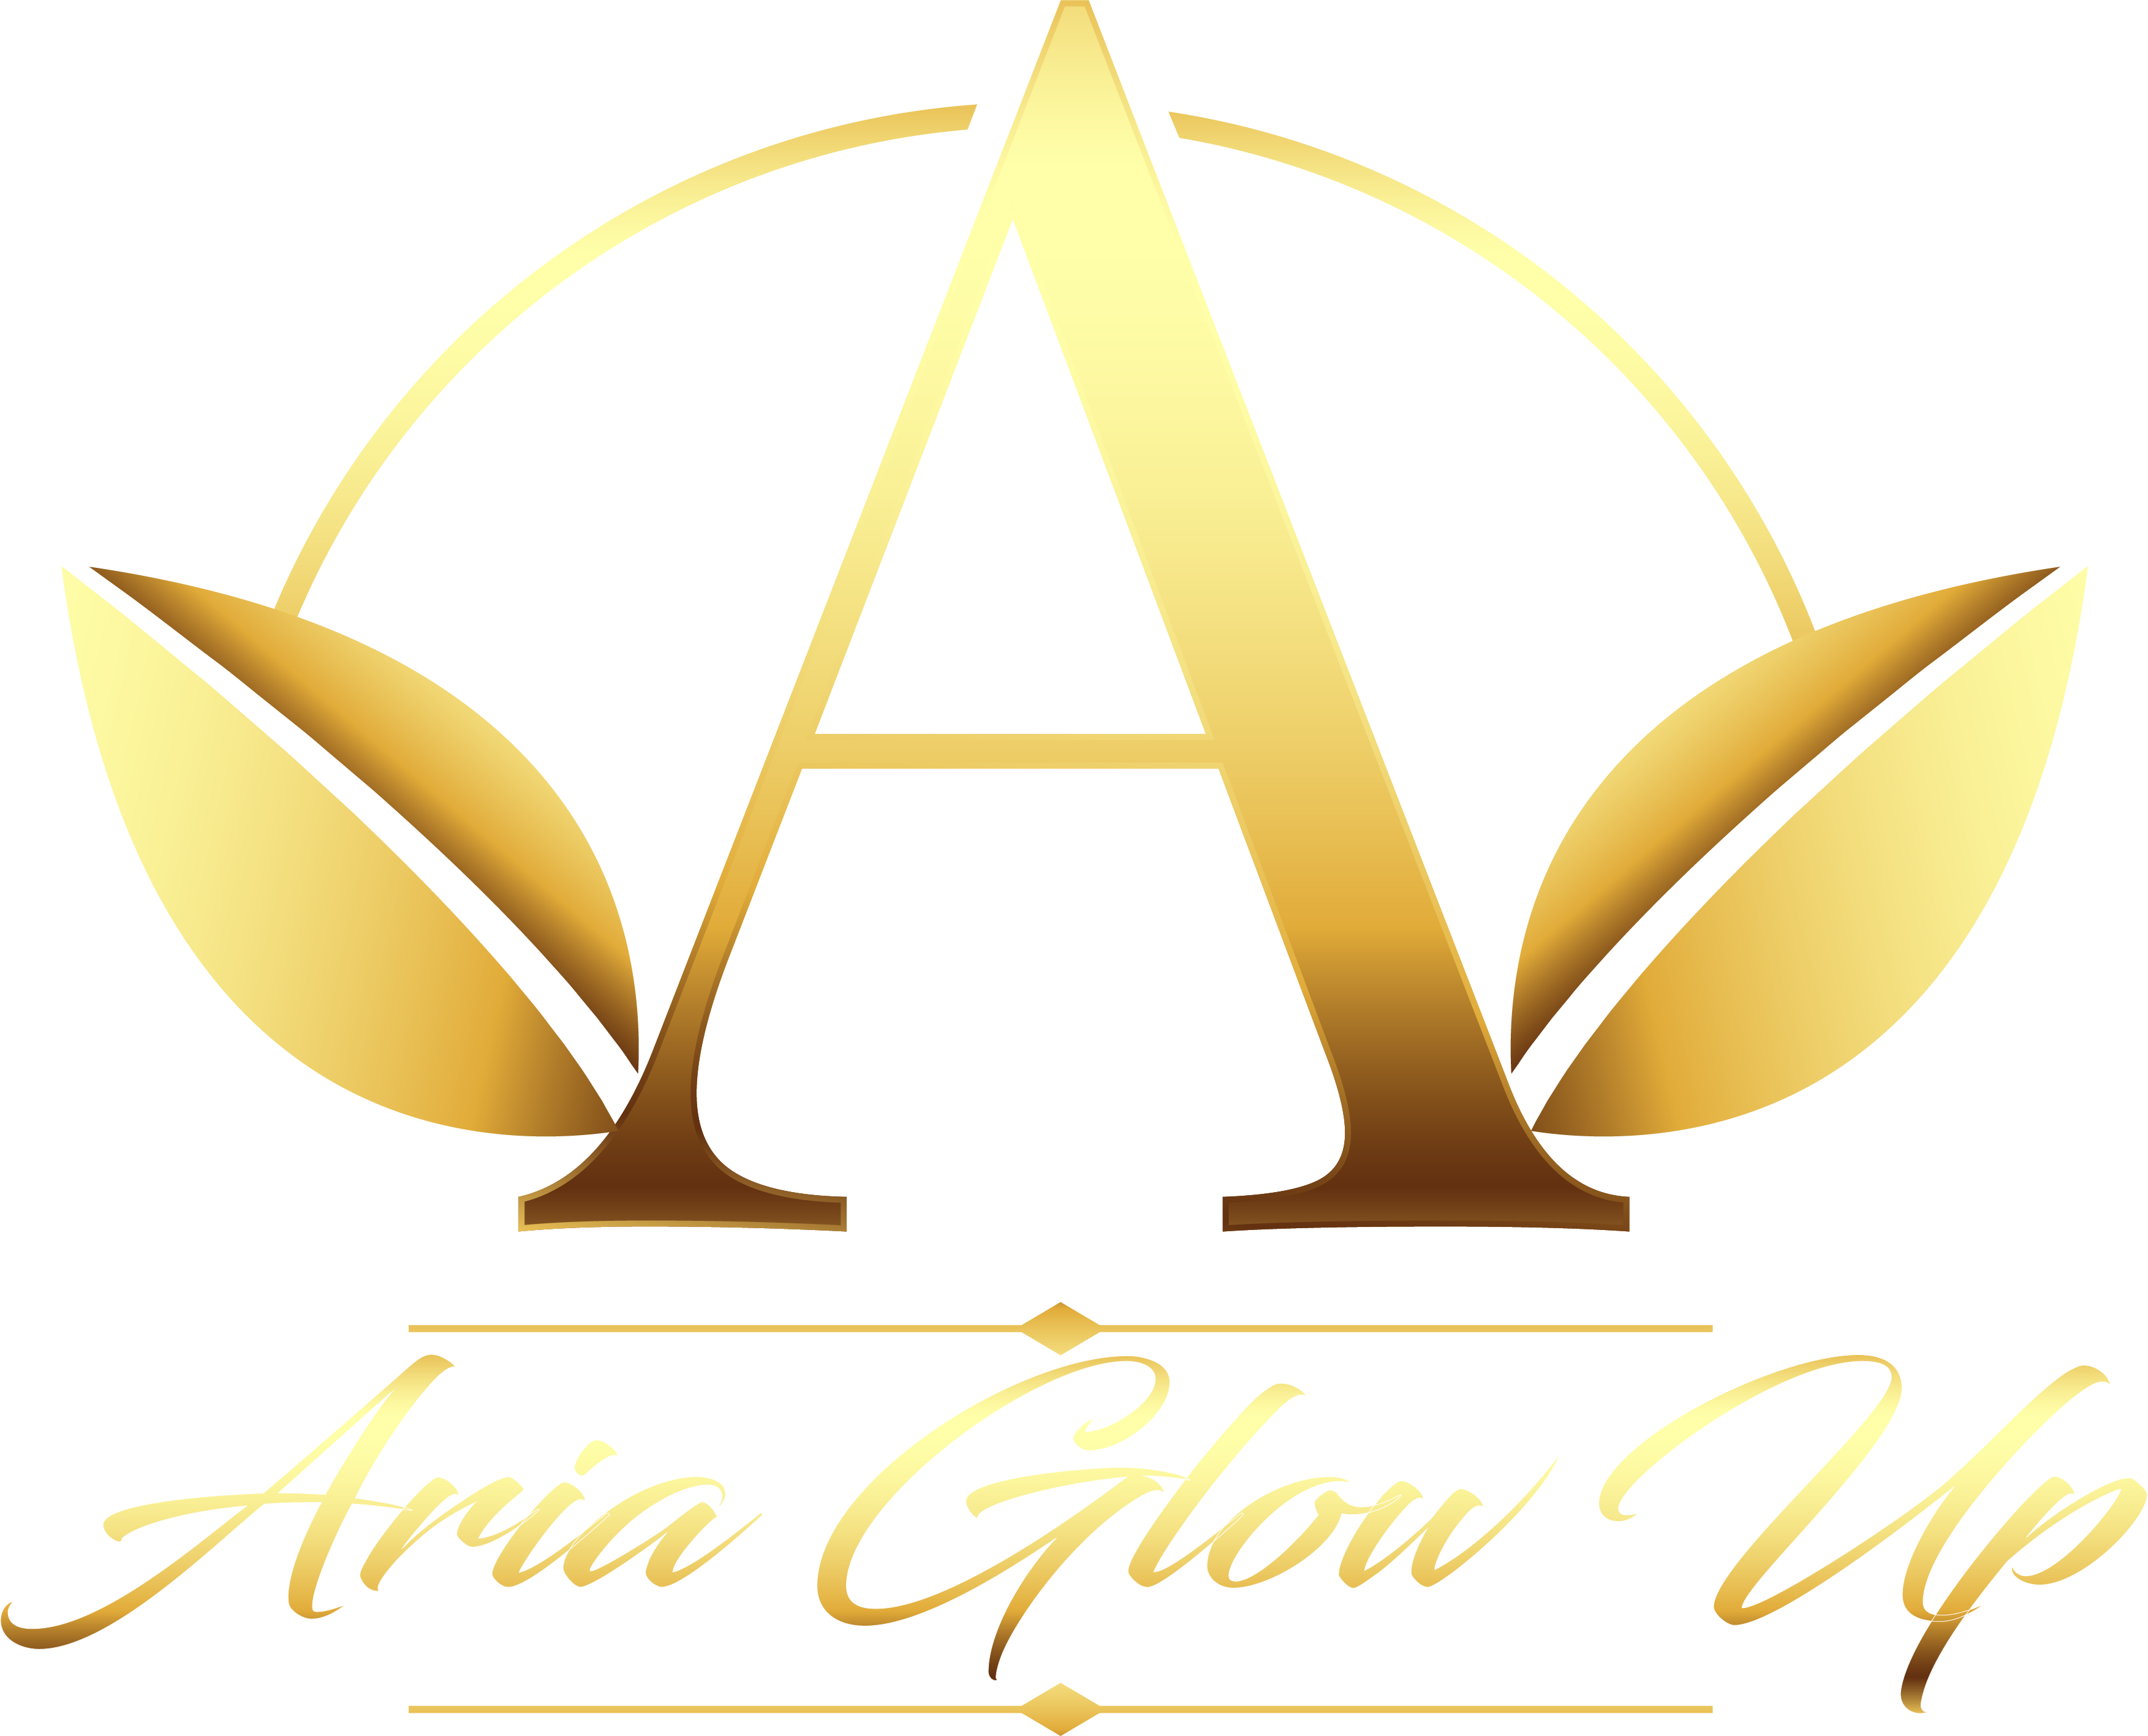 Aria Glow Up